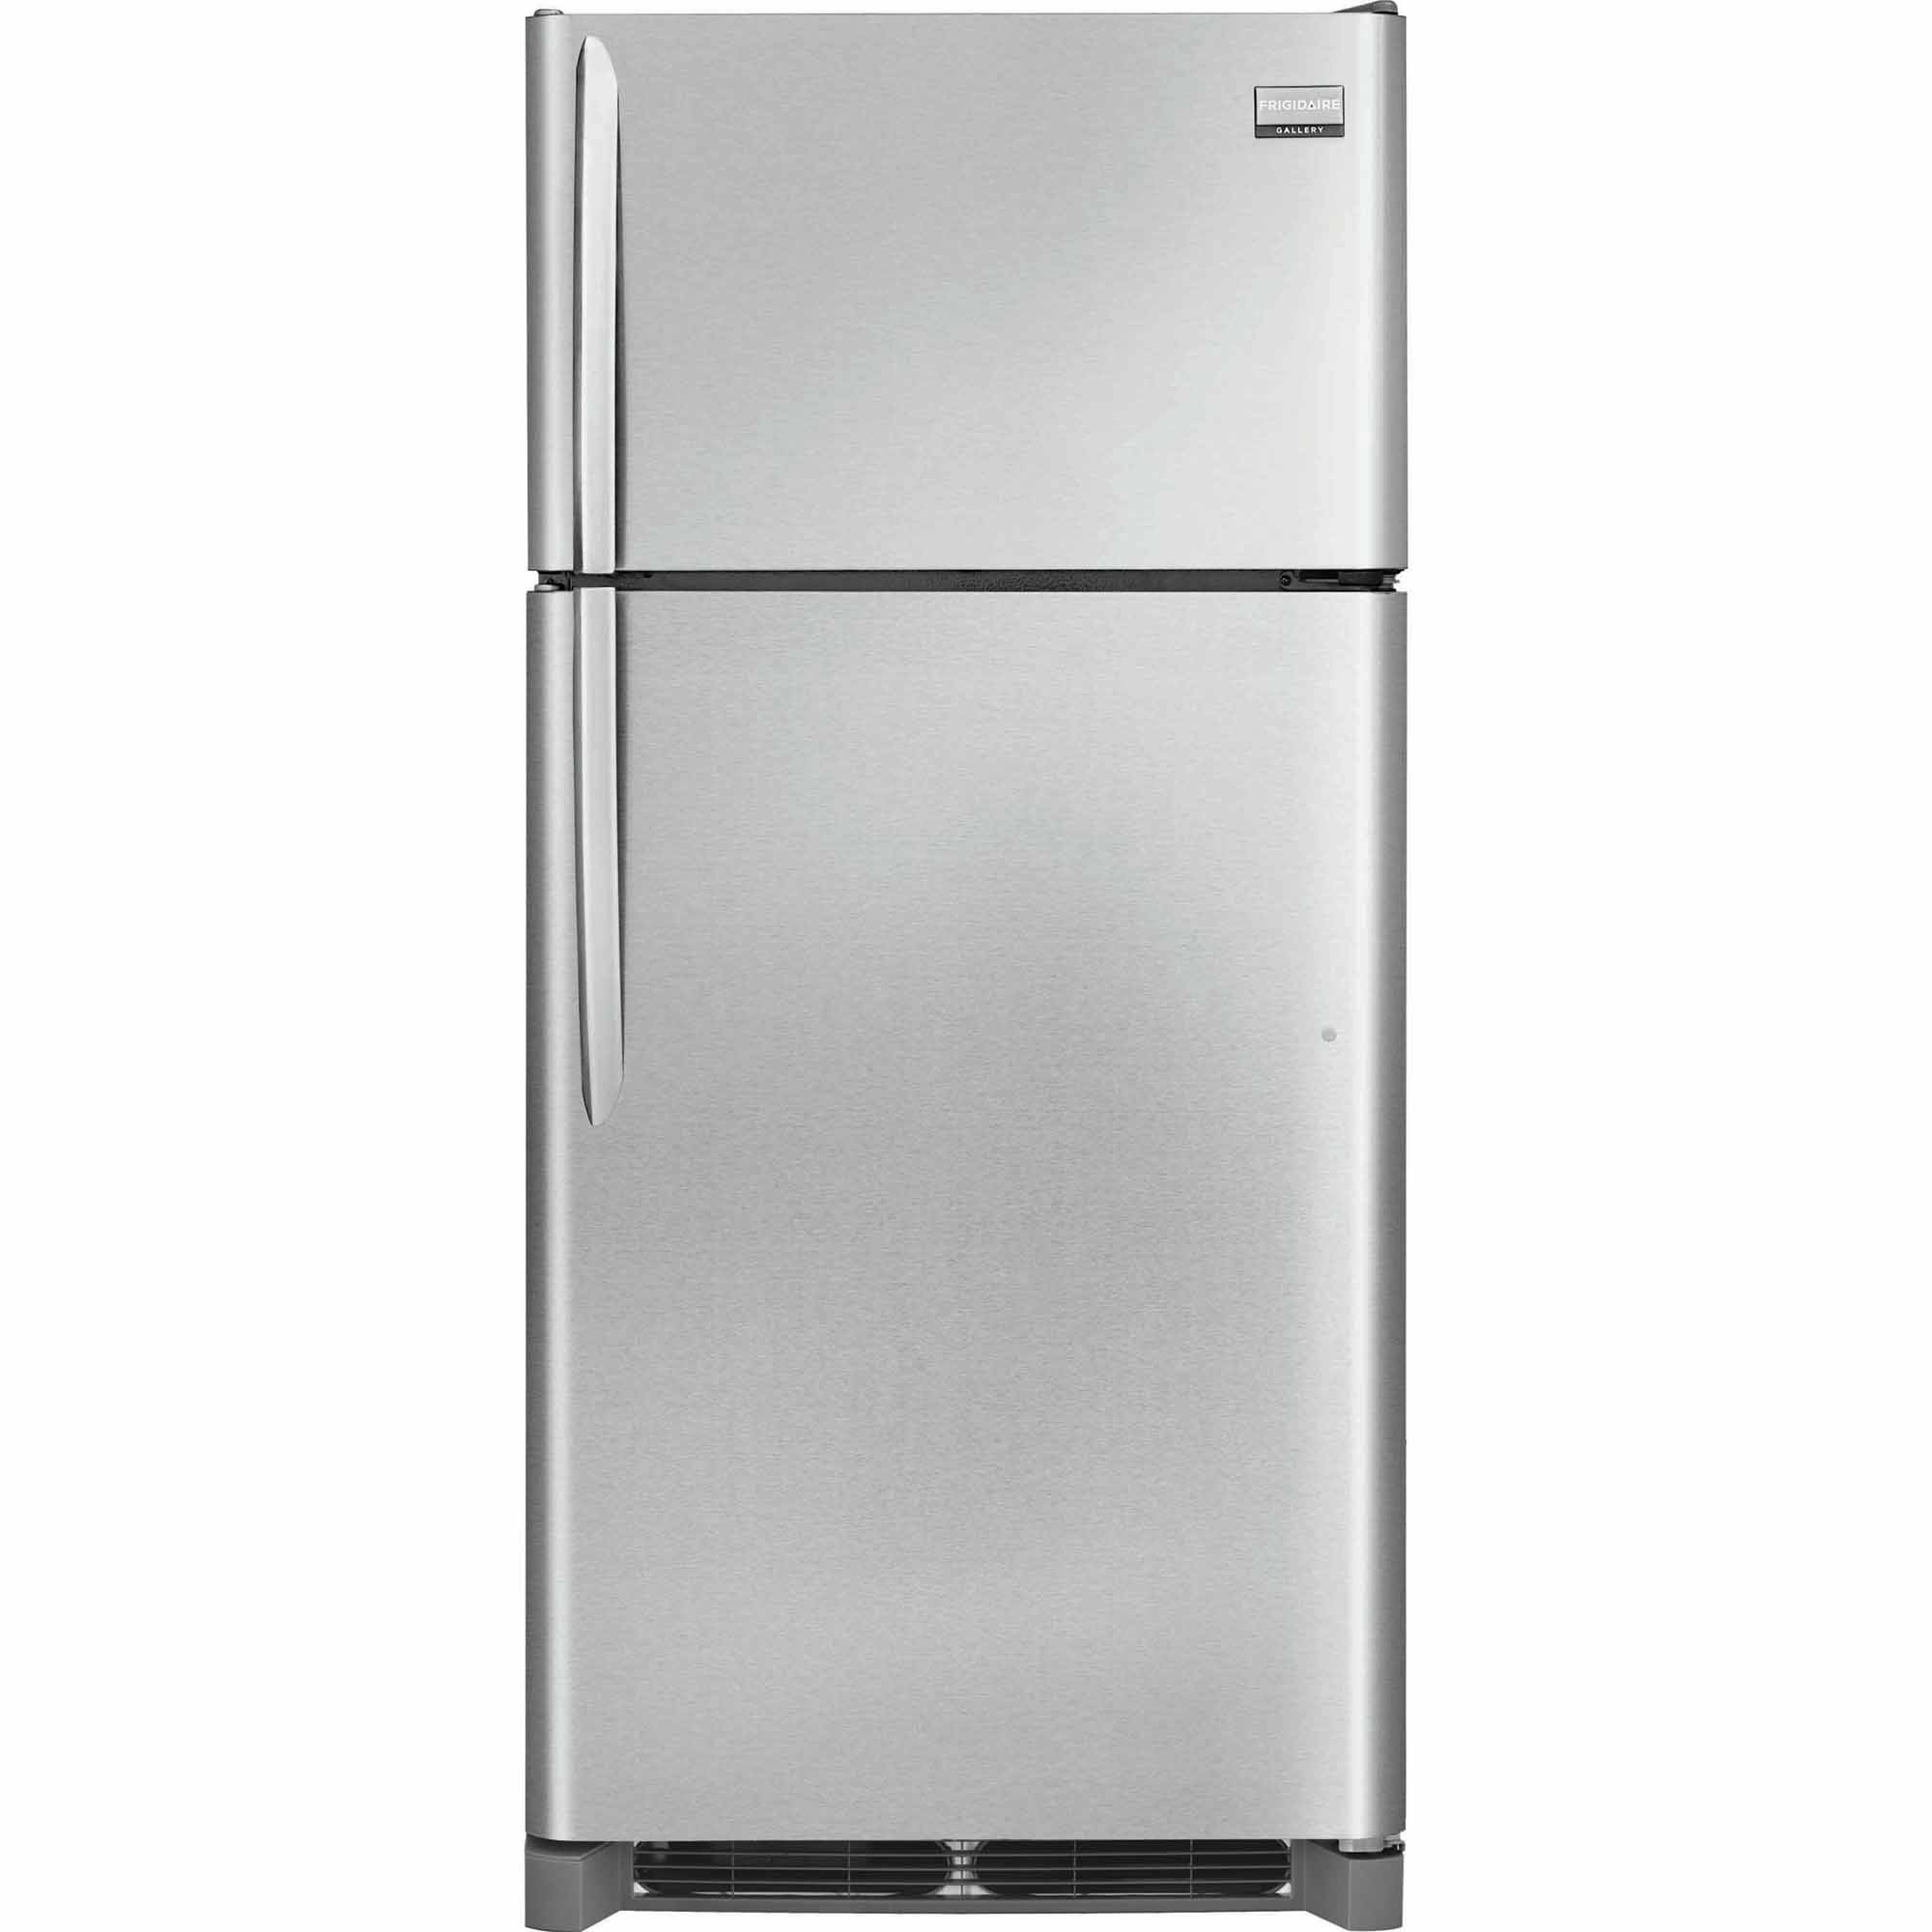 Frigidaire Gallery Stainless Steel Refrigerator